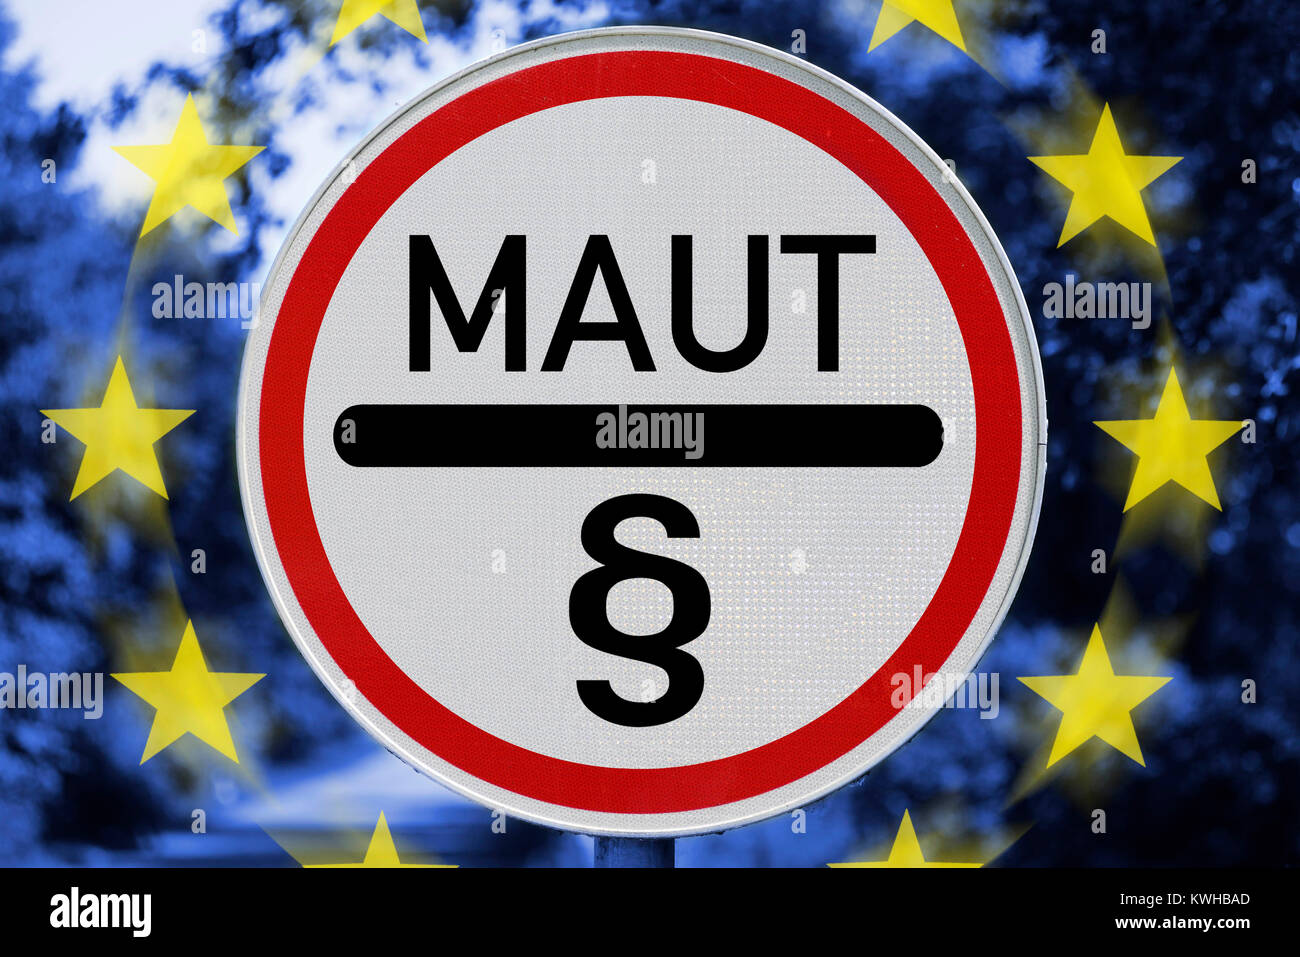 Toll sign with the section signs and EU stars, the EU stops German passenger car toll, Maut-Schild mit der Paragraphenzeichen und EU-Sterne, EU stoppt Stock Photo